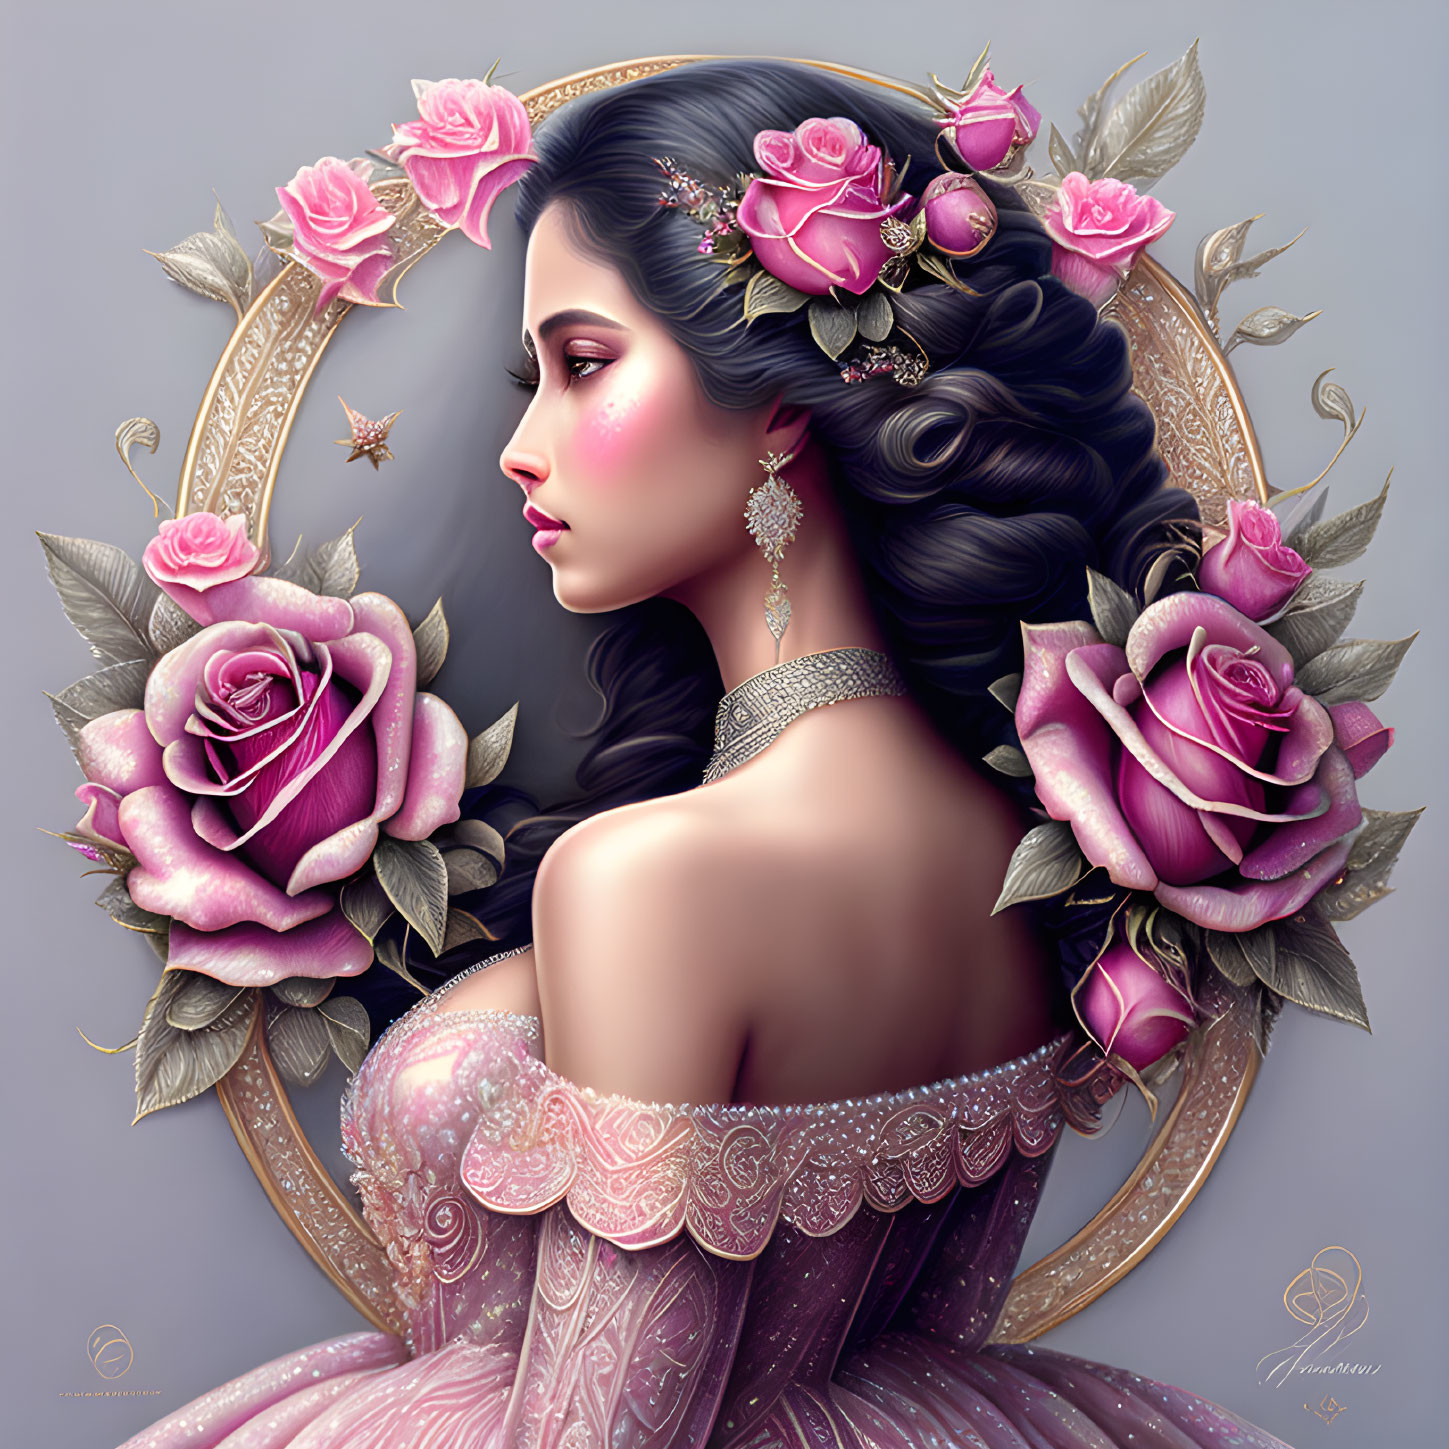 Princess rose